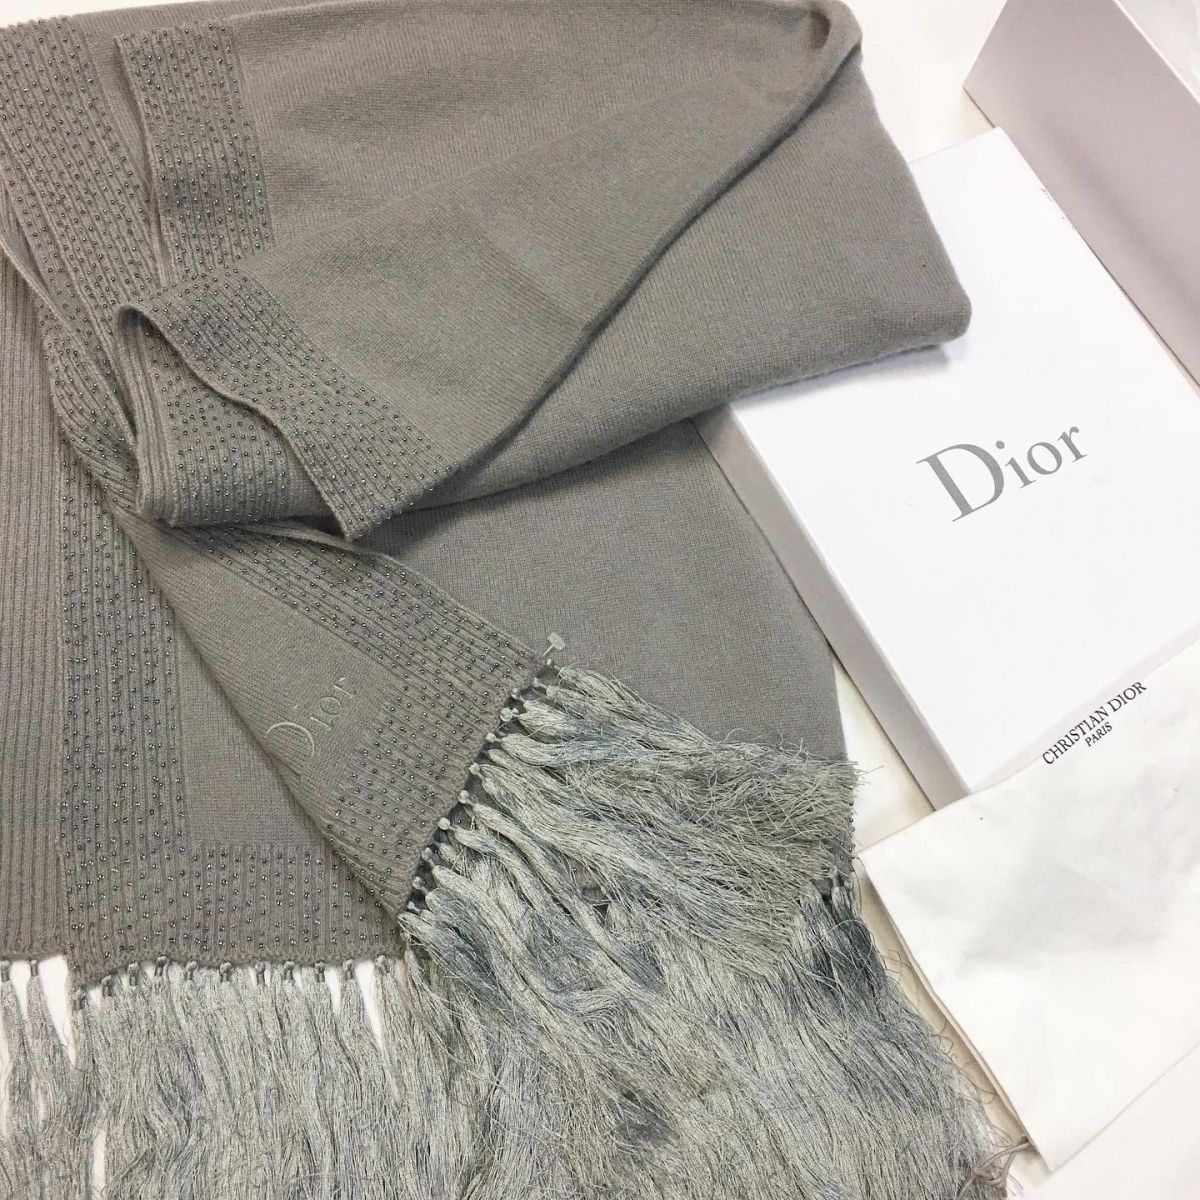 шарф /кашемир/ бисер/ Dior размер 65/200 цена 27 693 руб 